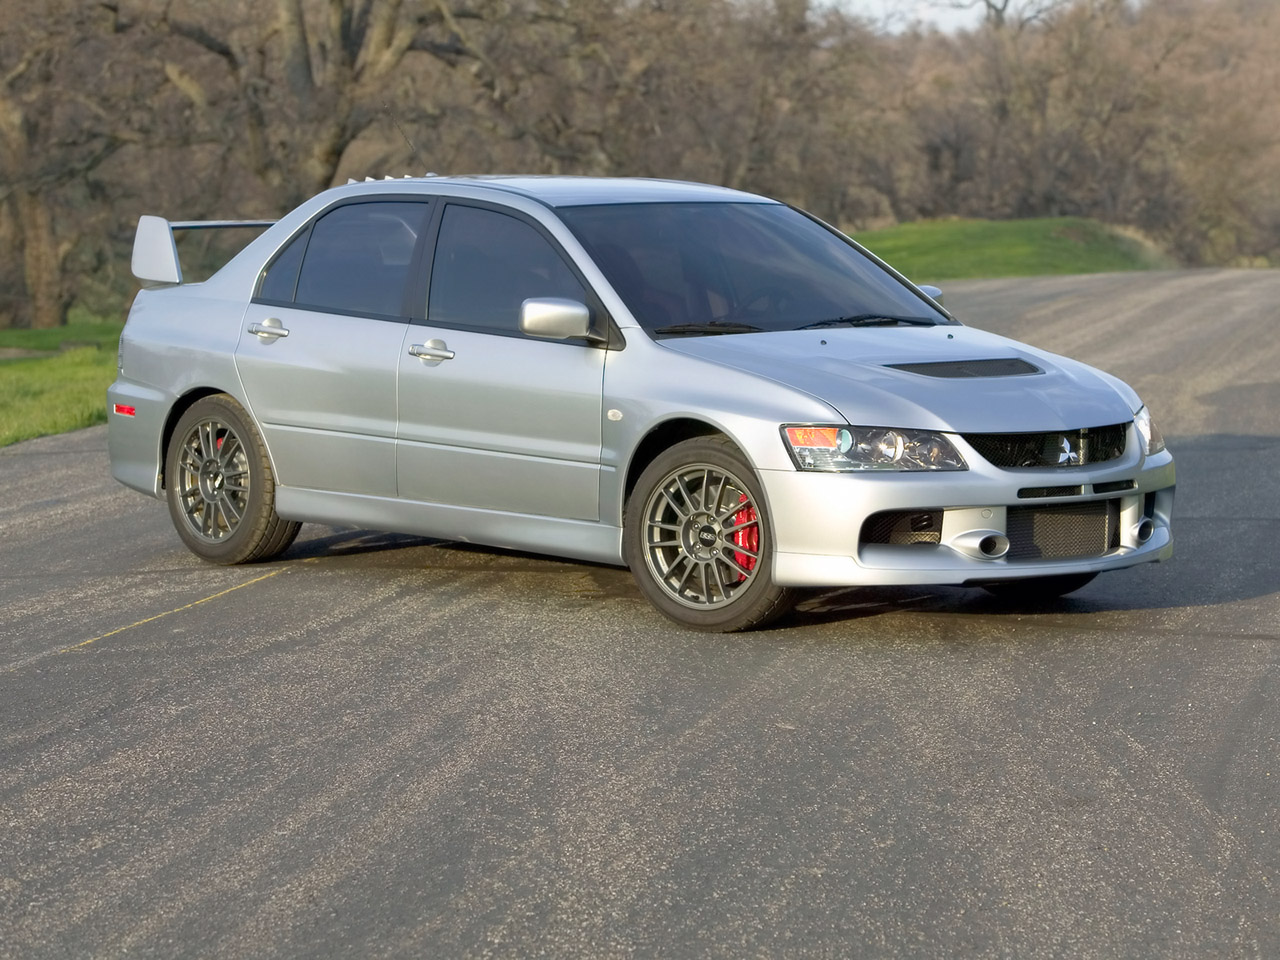 Mitsubishi Lancer Evolution Ix Picture 3 Reviews News Specs Buy Car